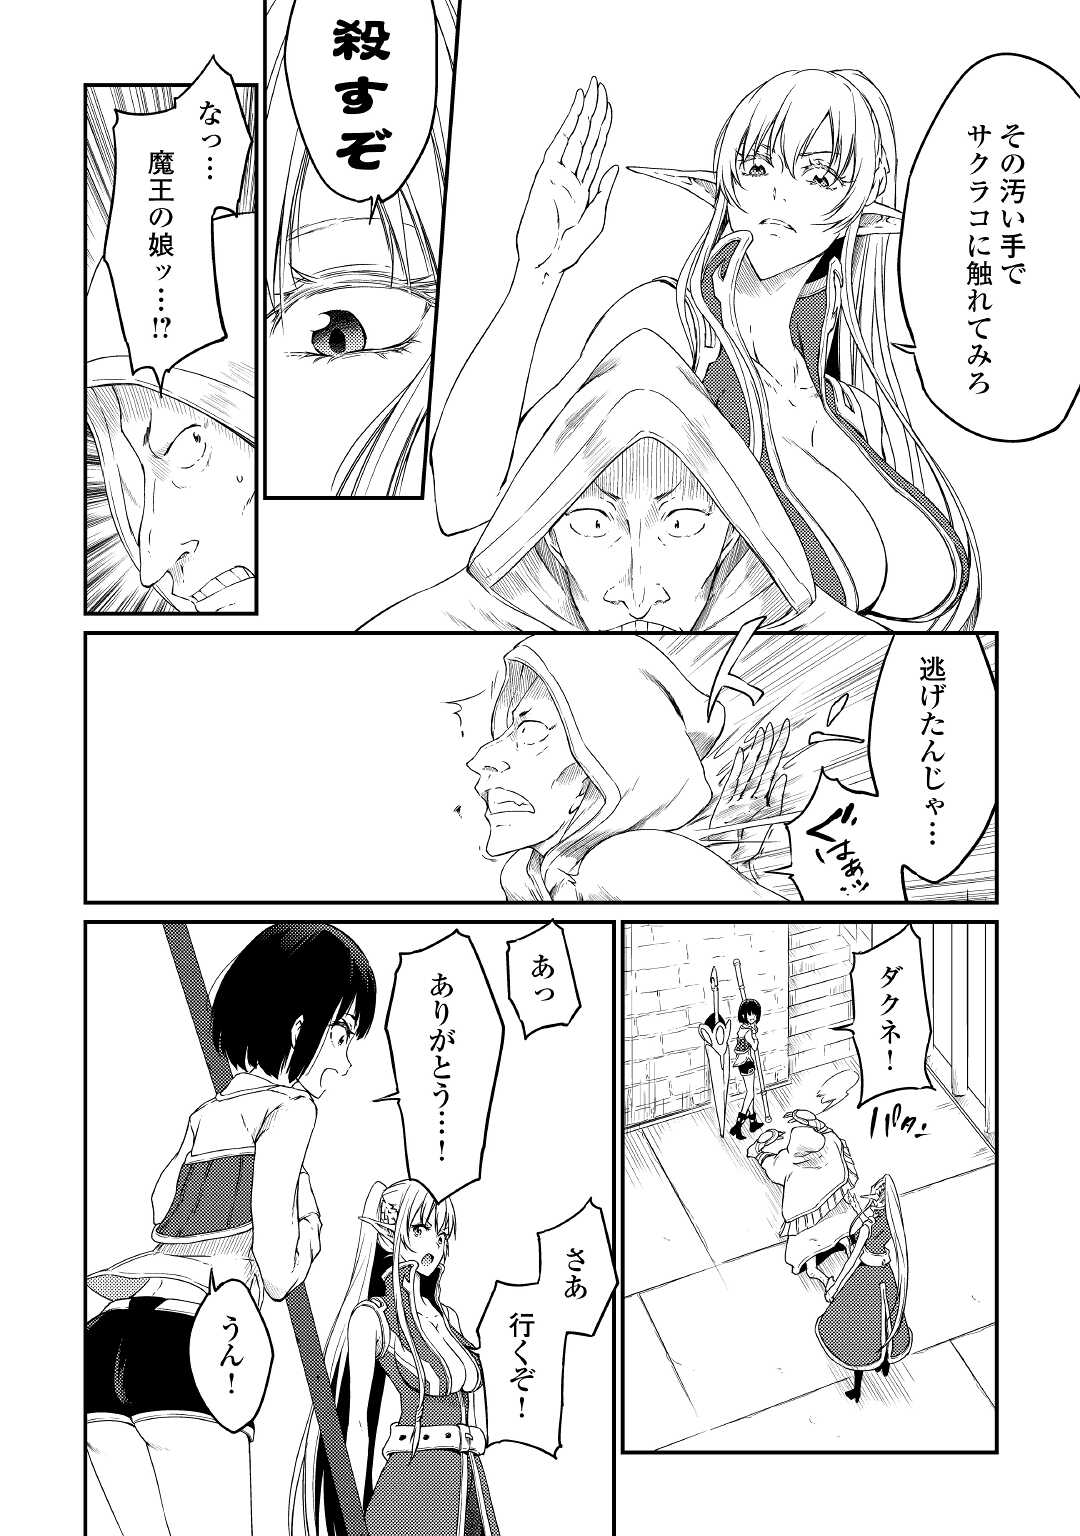 Yuusha no Mago to Maou no Musume - Chapter 31 - Page 2